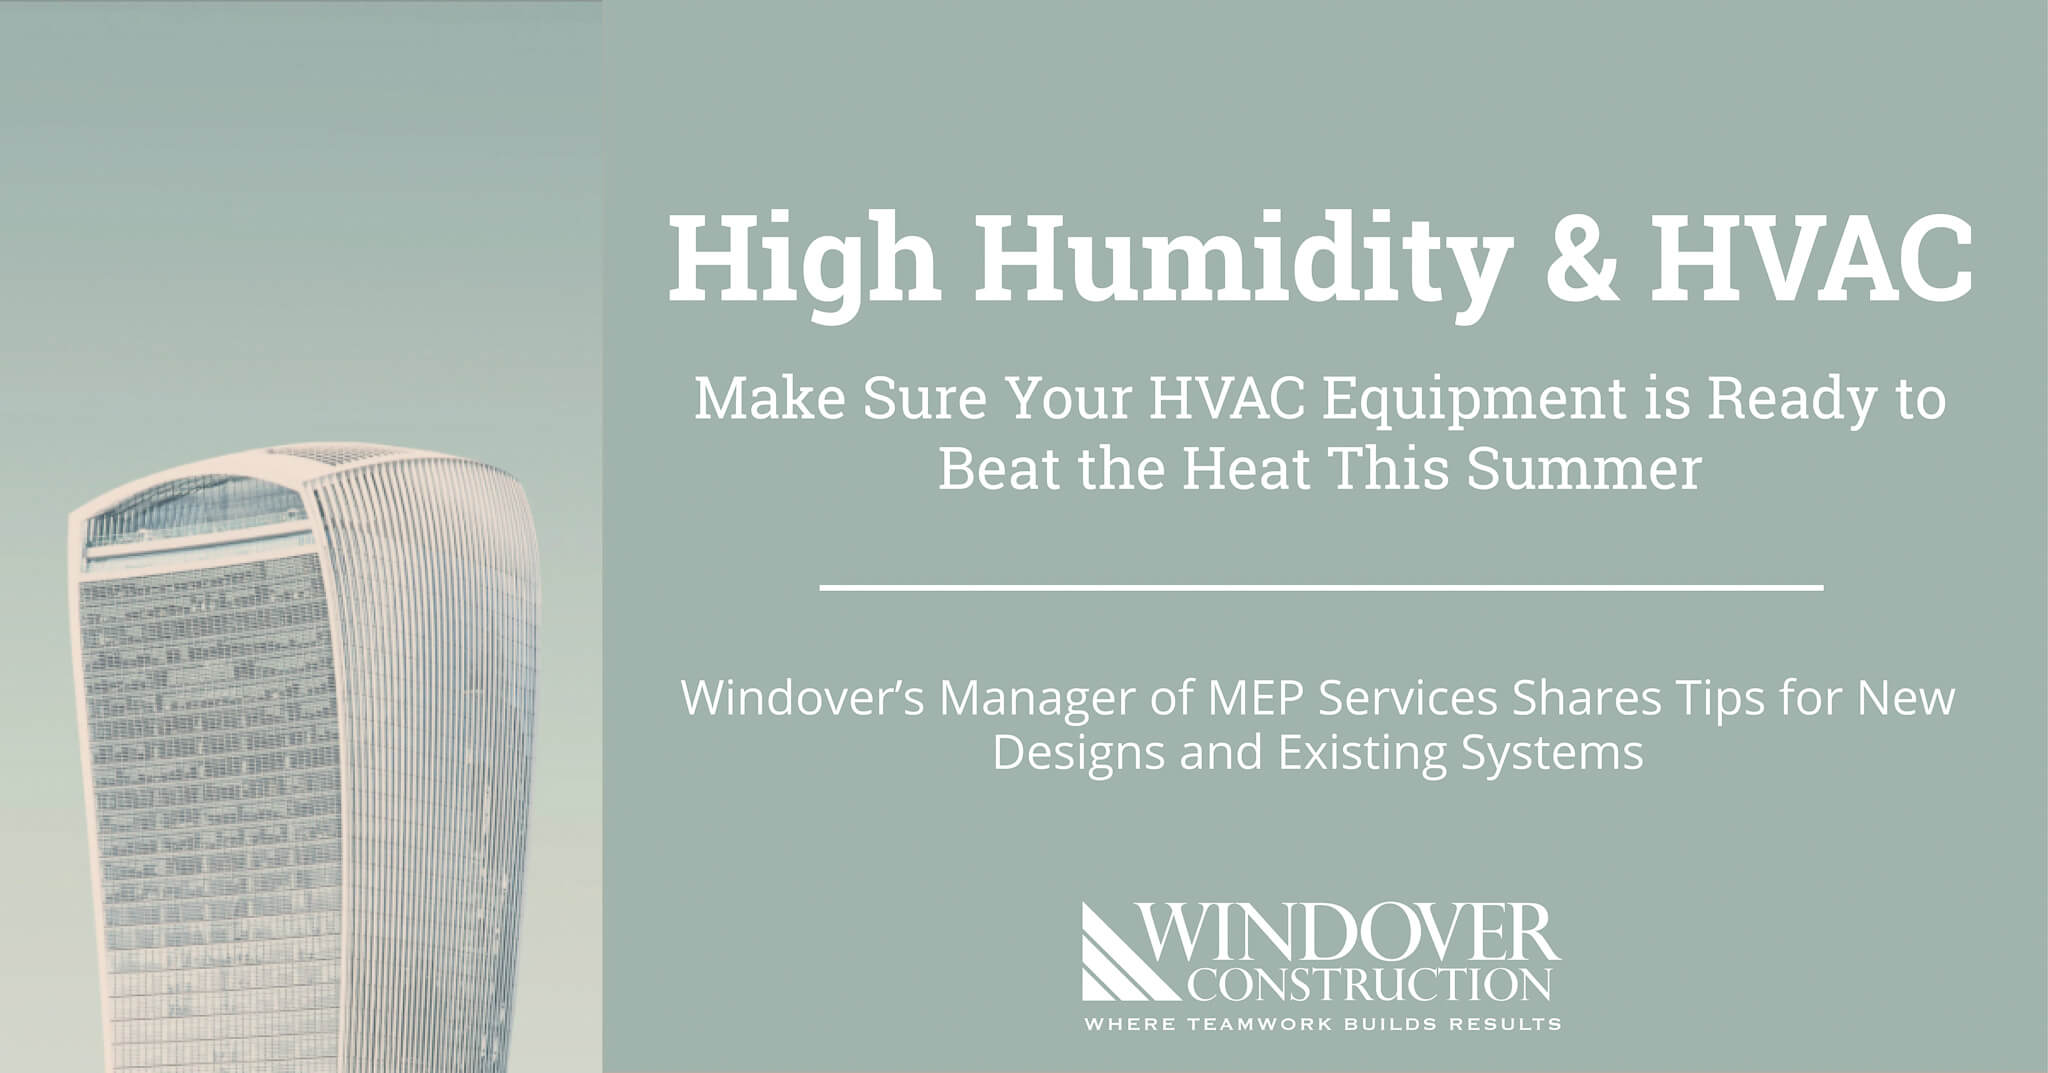 High Humidity & HVAC